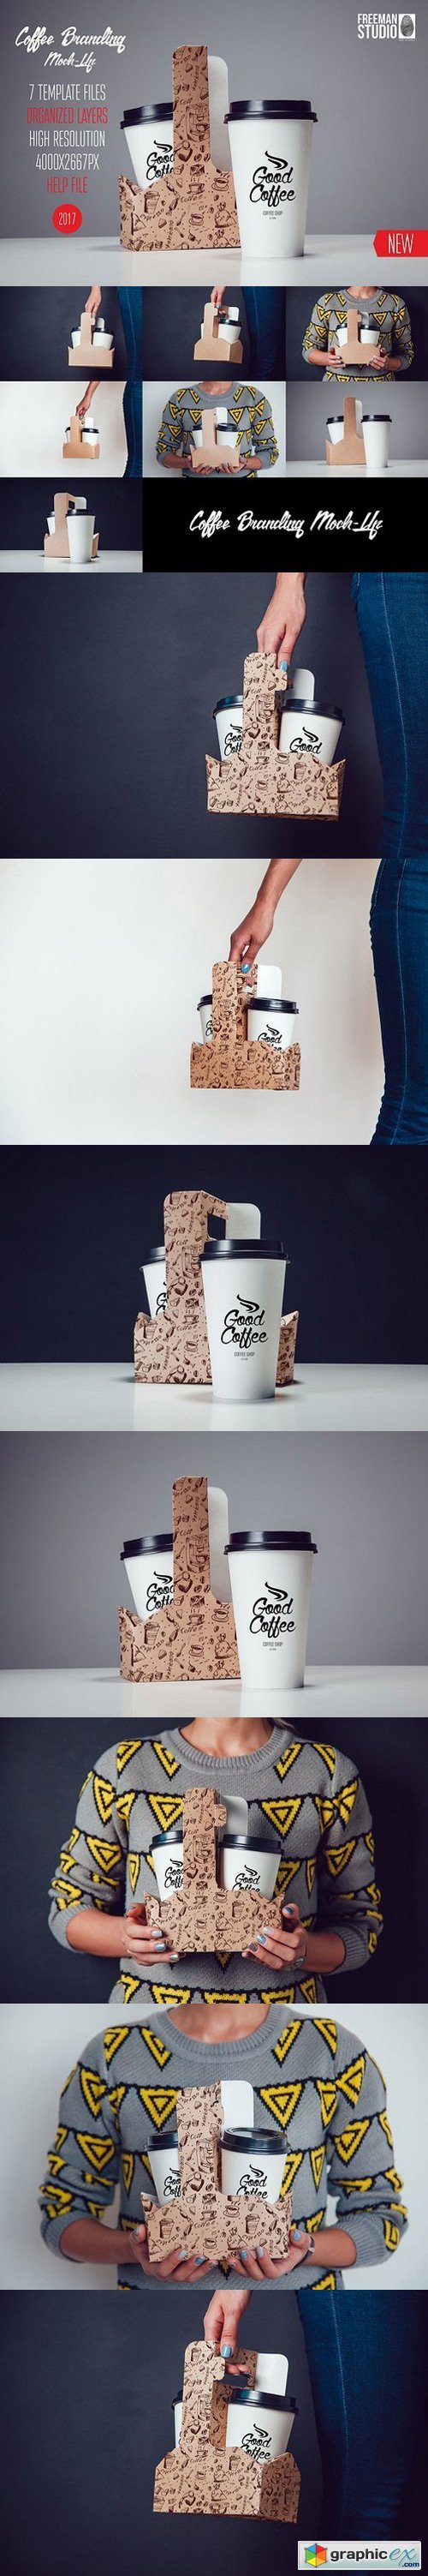 Coffee Branding Mock-Up Vol. 4